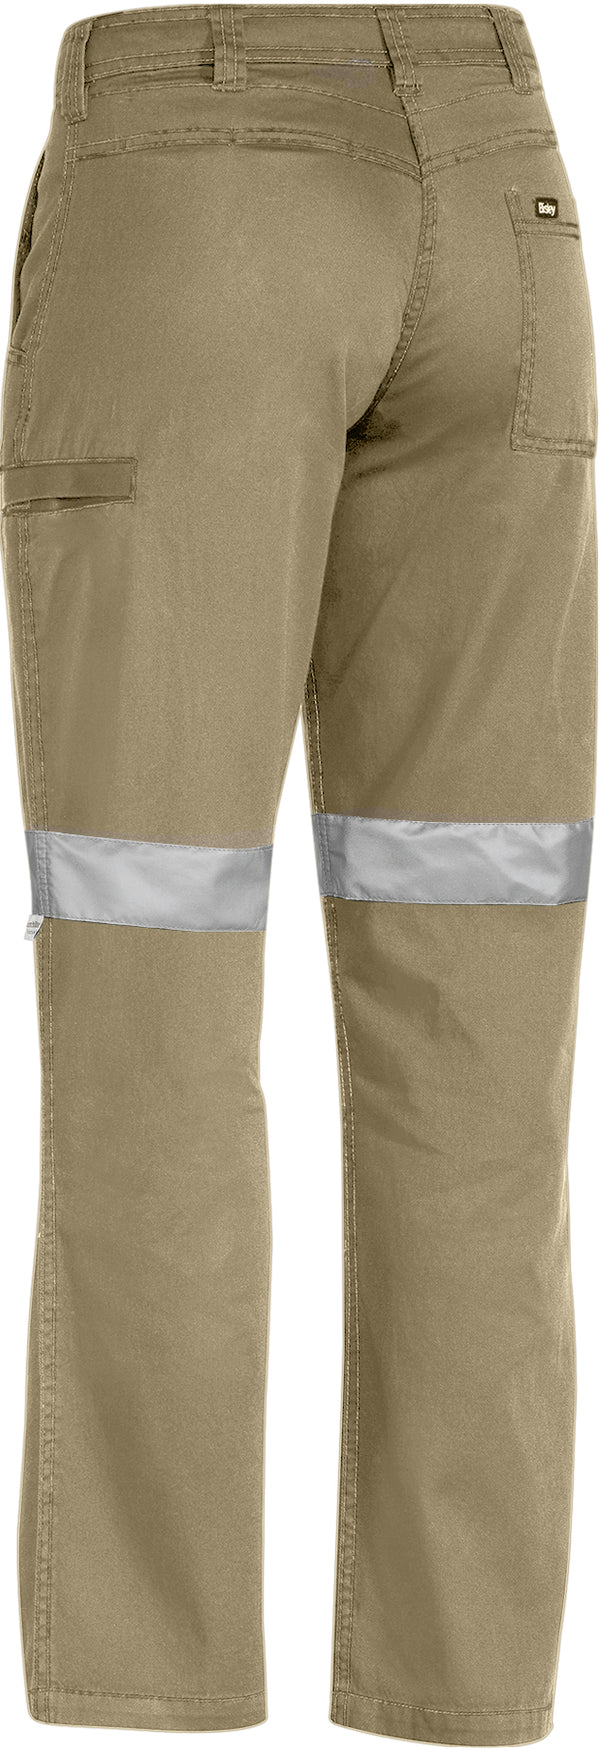 Safety Wear Pants – Trademates Workwear